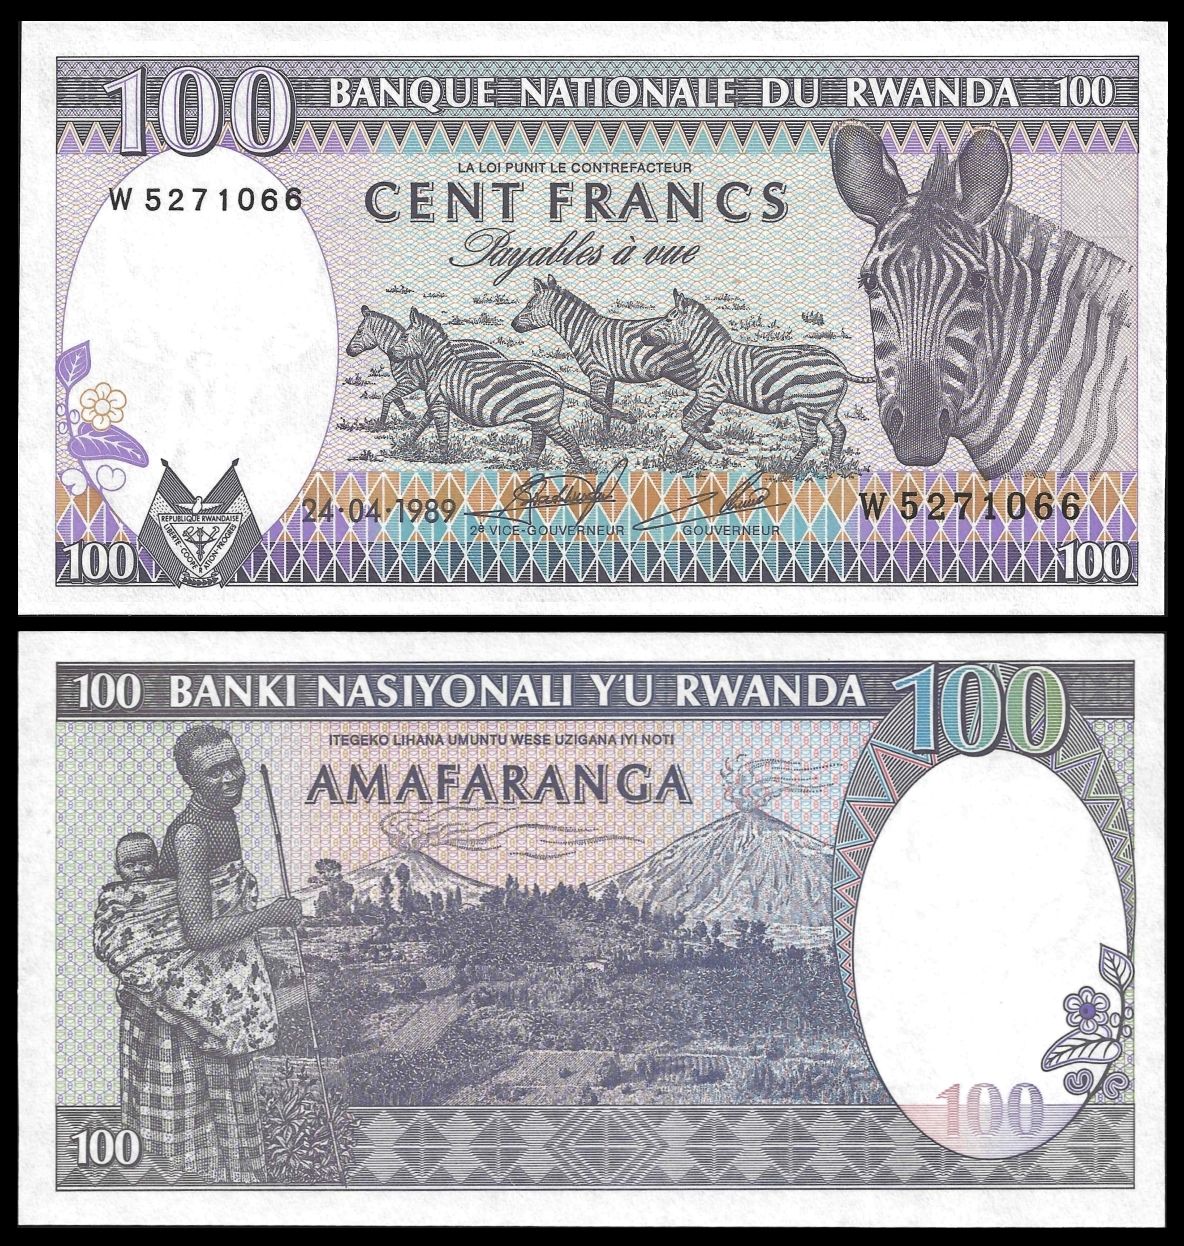 100 francs Rwanda 1989